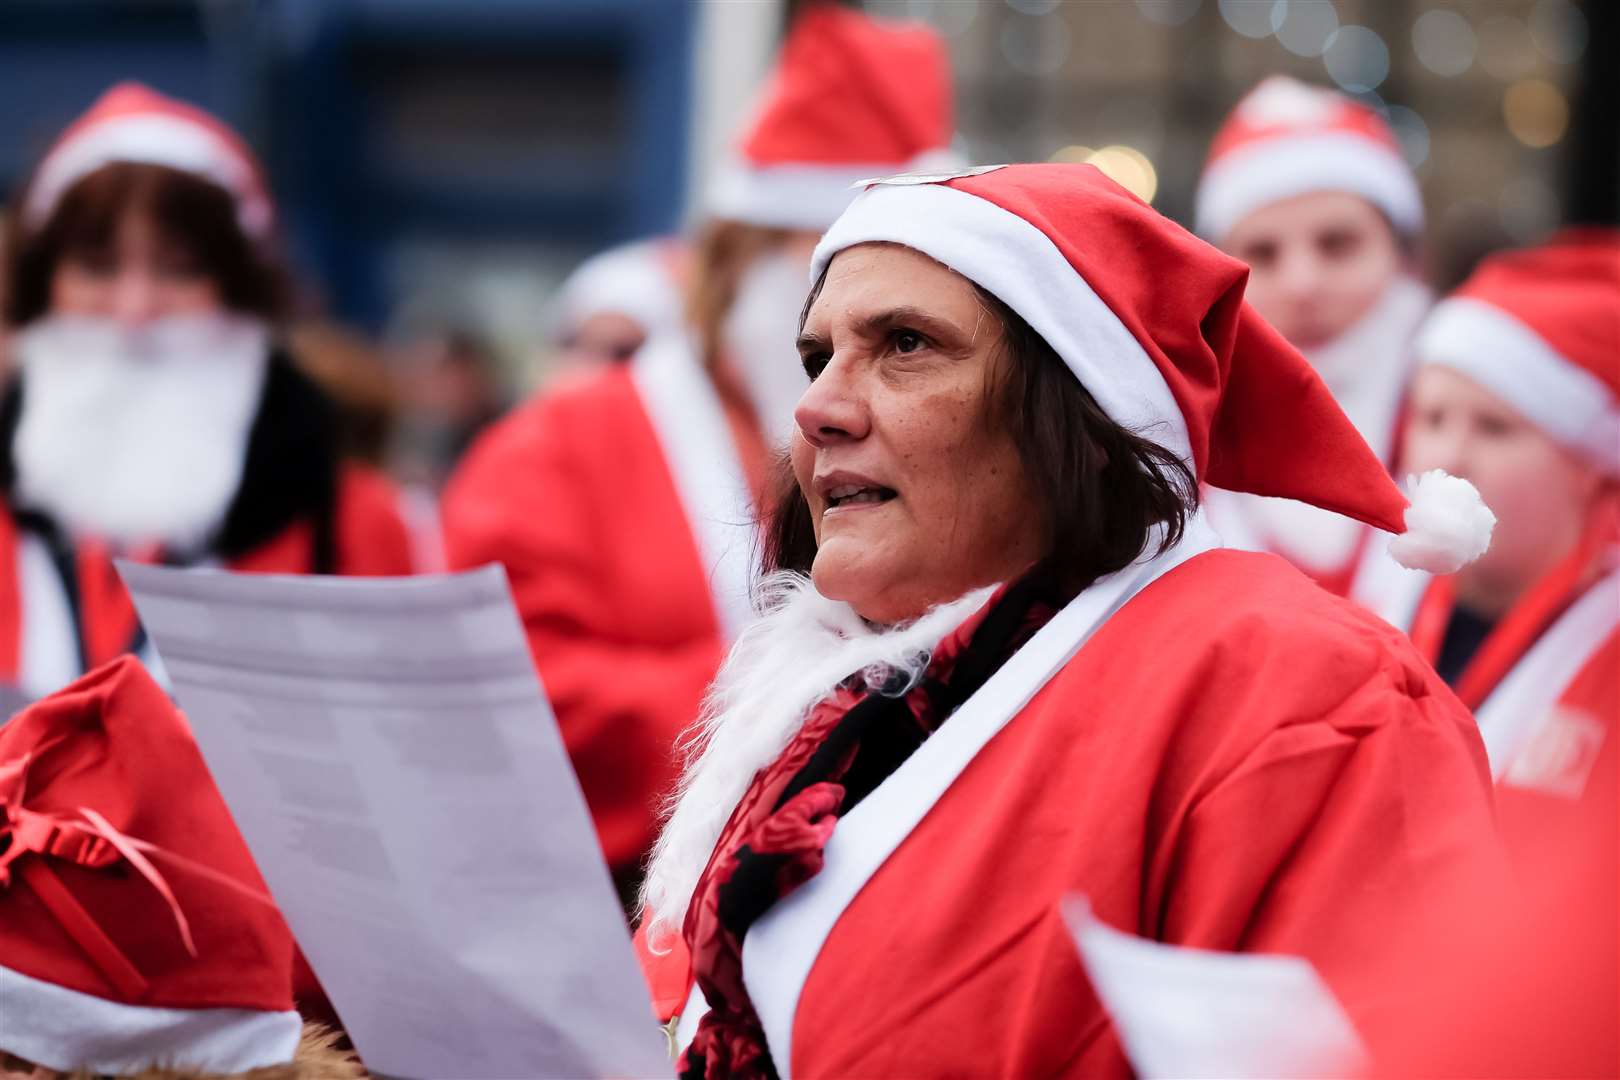 Jenny Hurkett of Minster-on-Sea Rotary Club's singing carols at the Sheppey Santa Saunter in Sheerness (20888467)